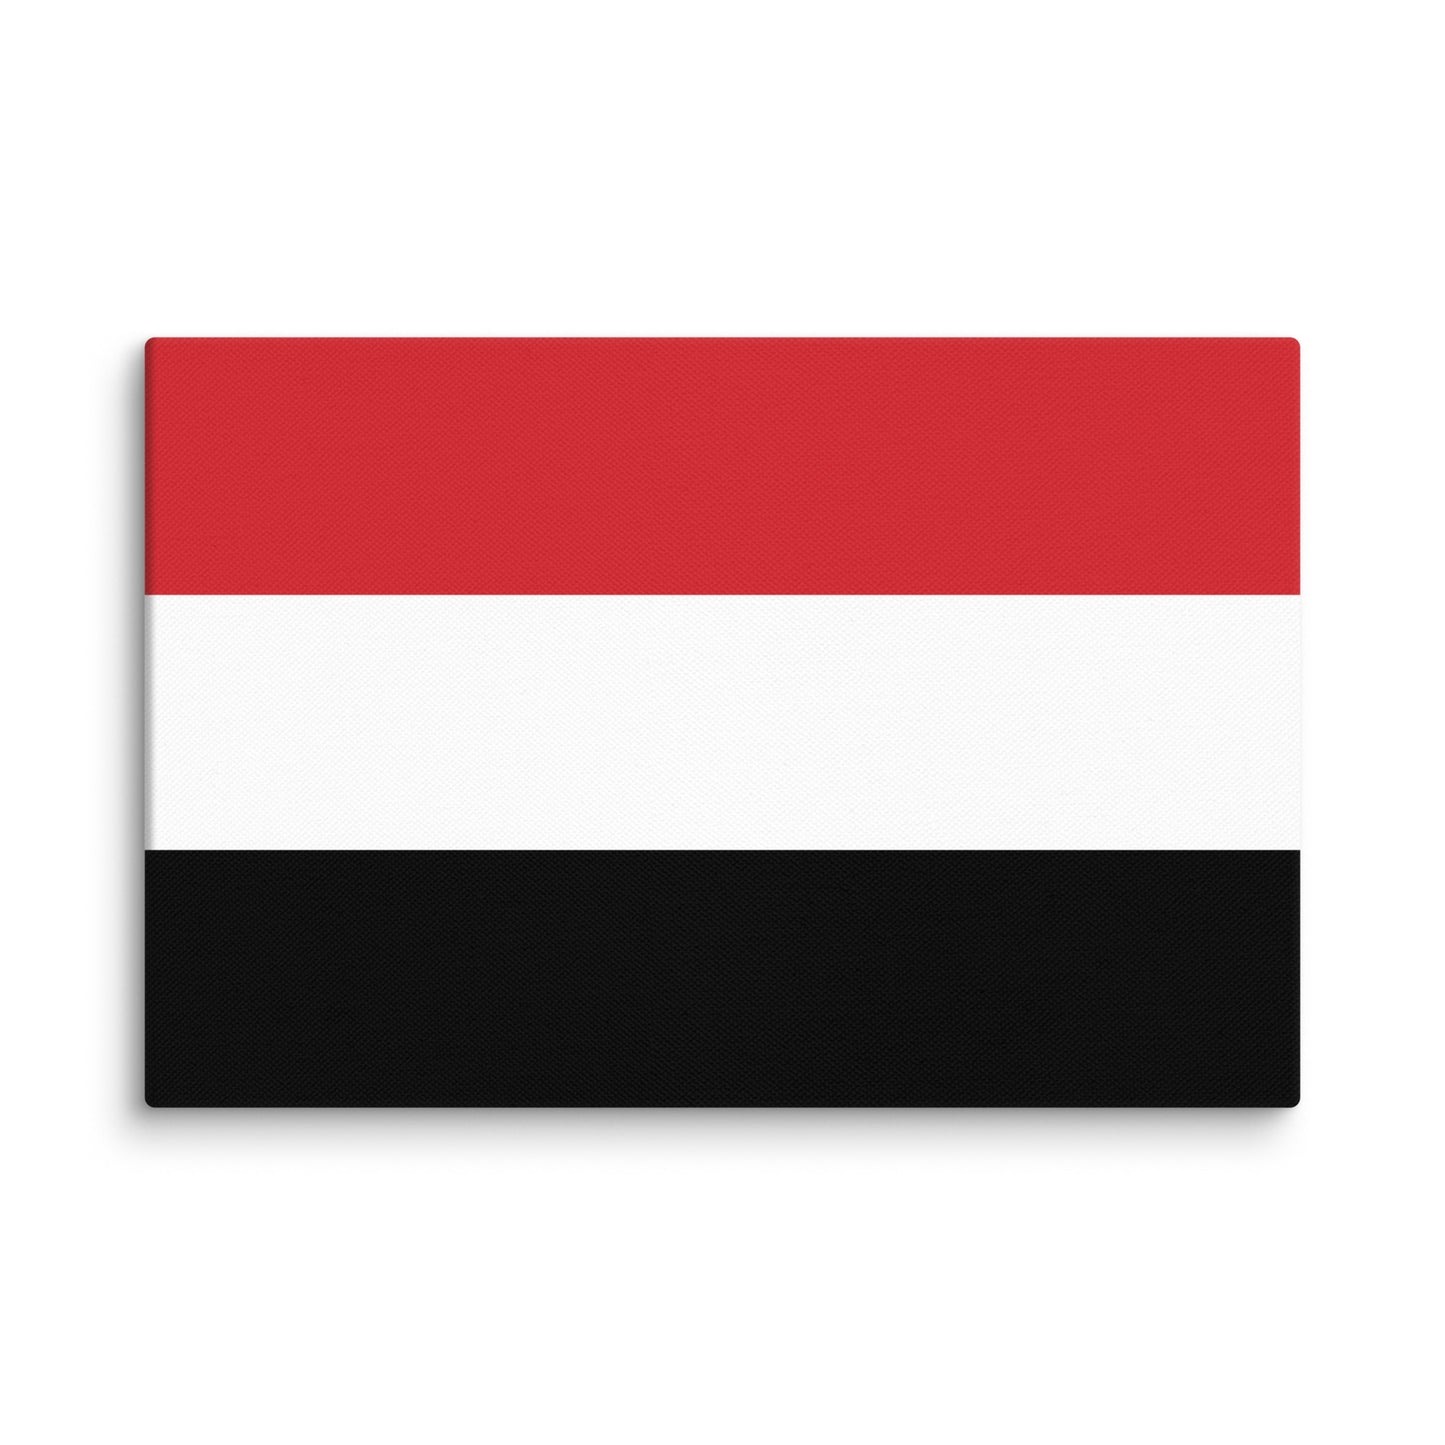 Yemen Flag _ علم اليمن _ size 18x12" canvas print